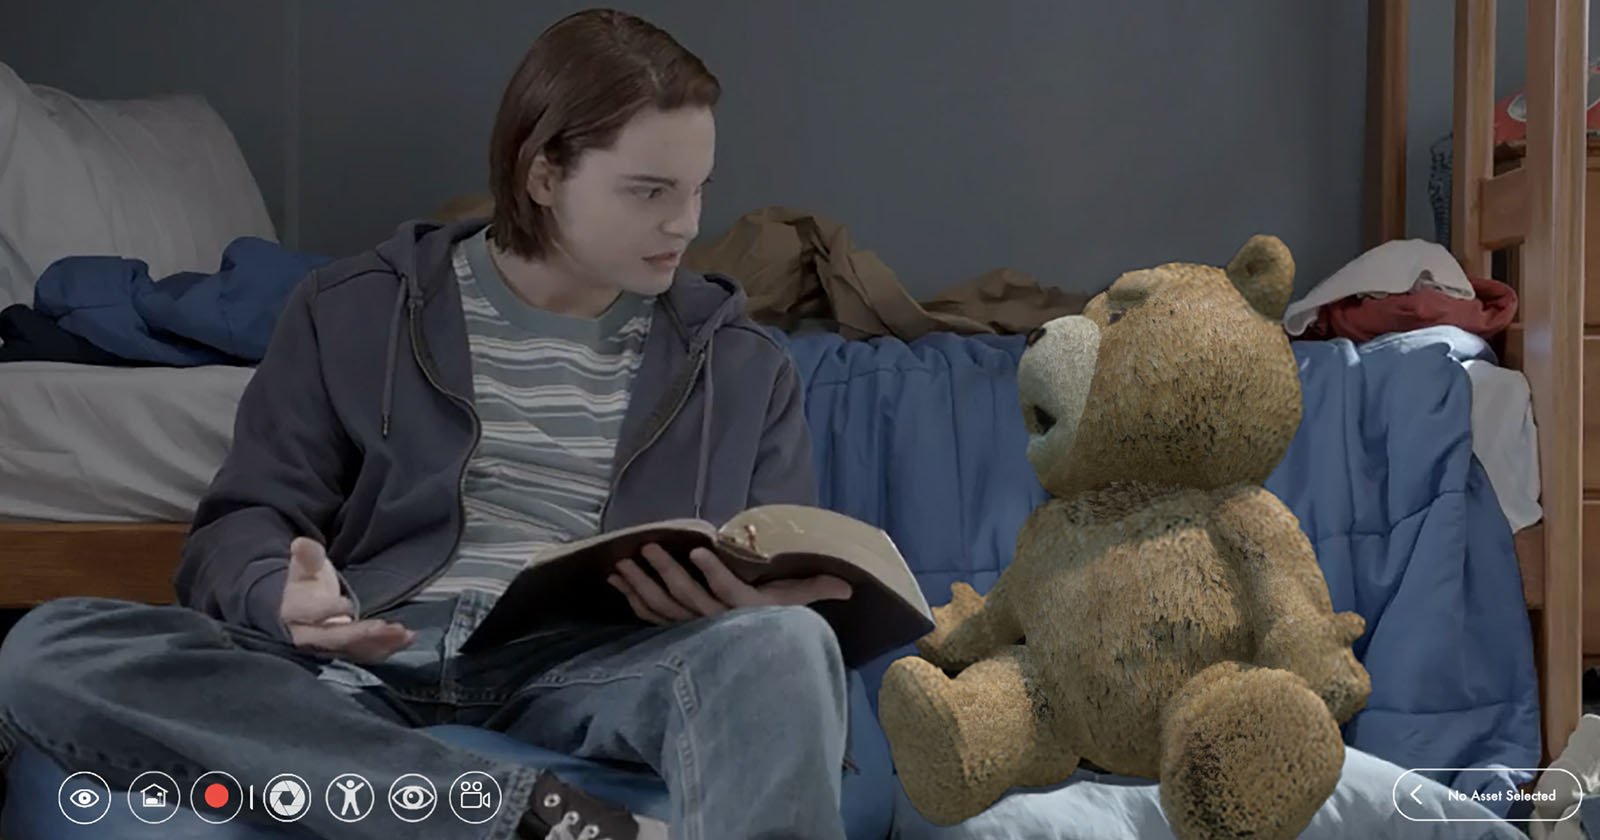  incredible tech brings ted trash-talking teddy bear 